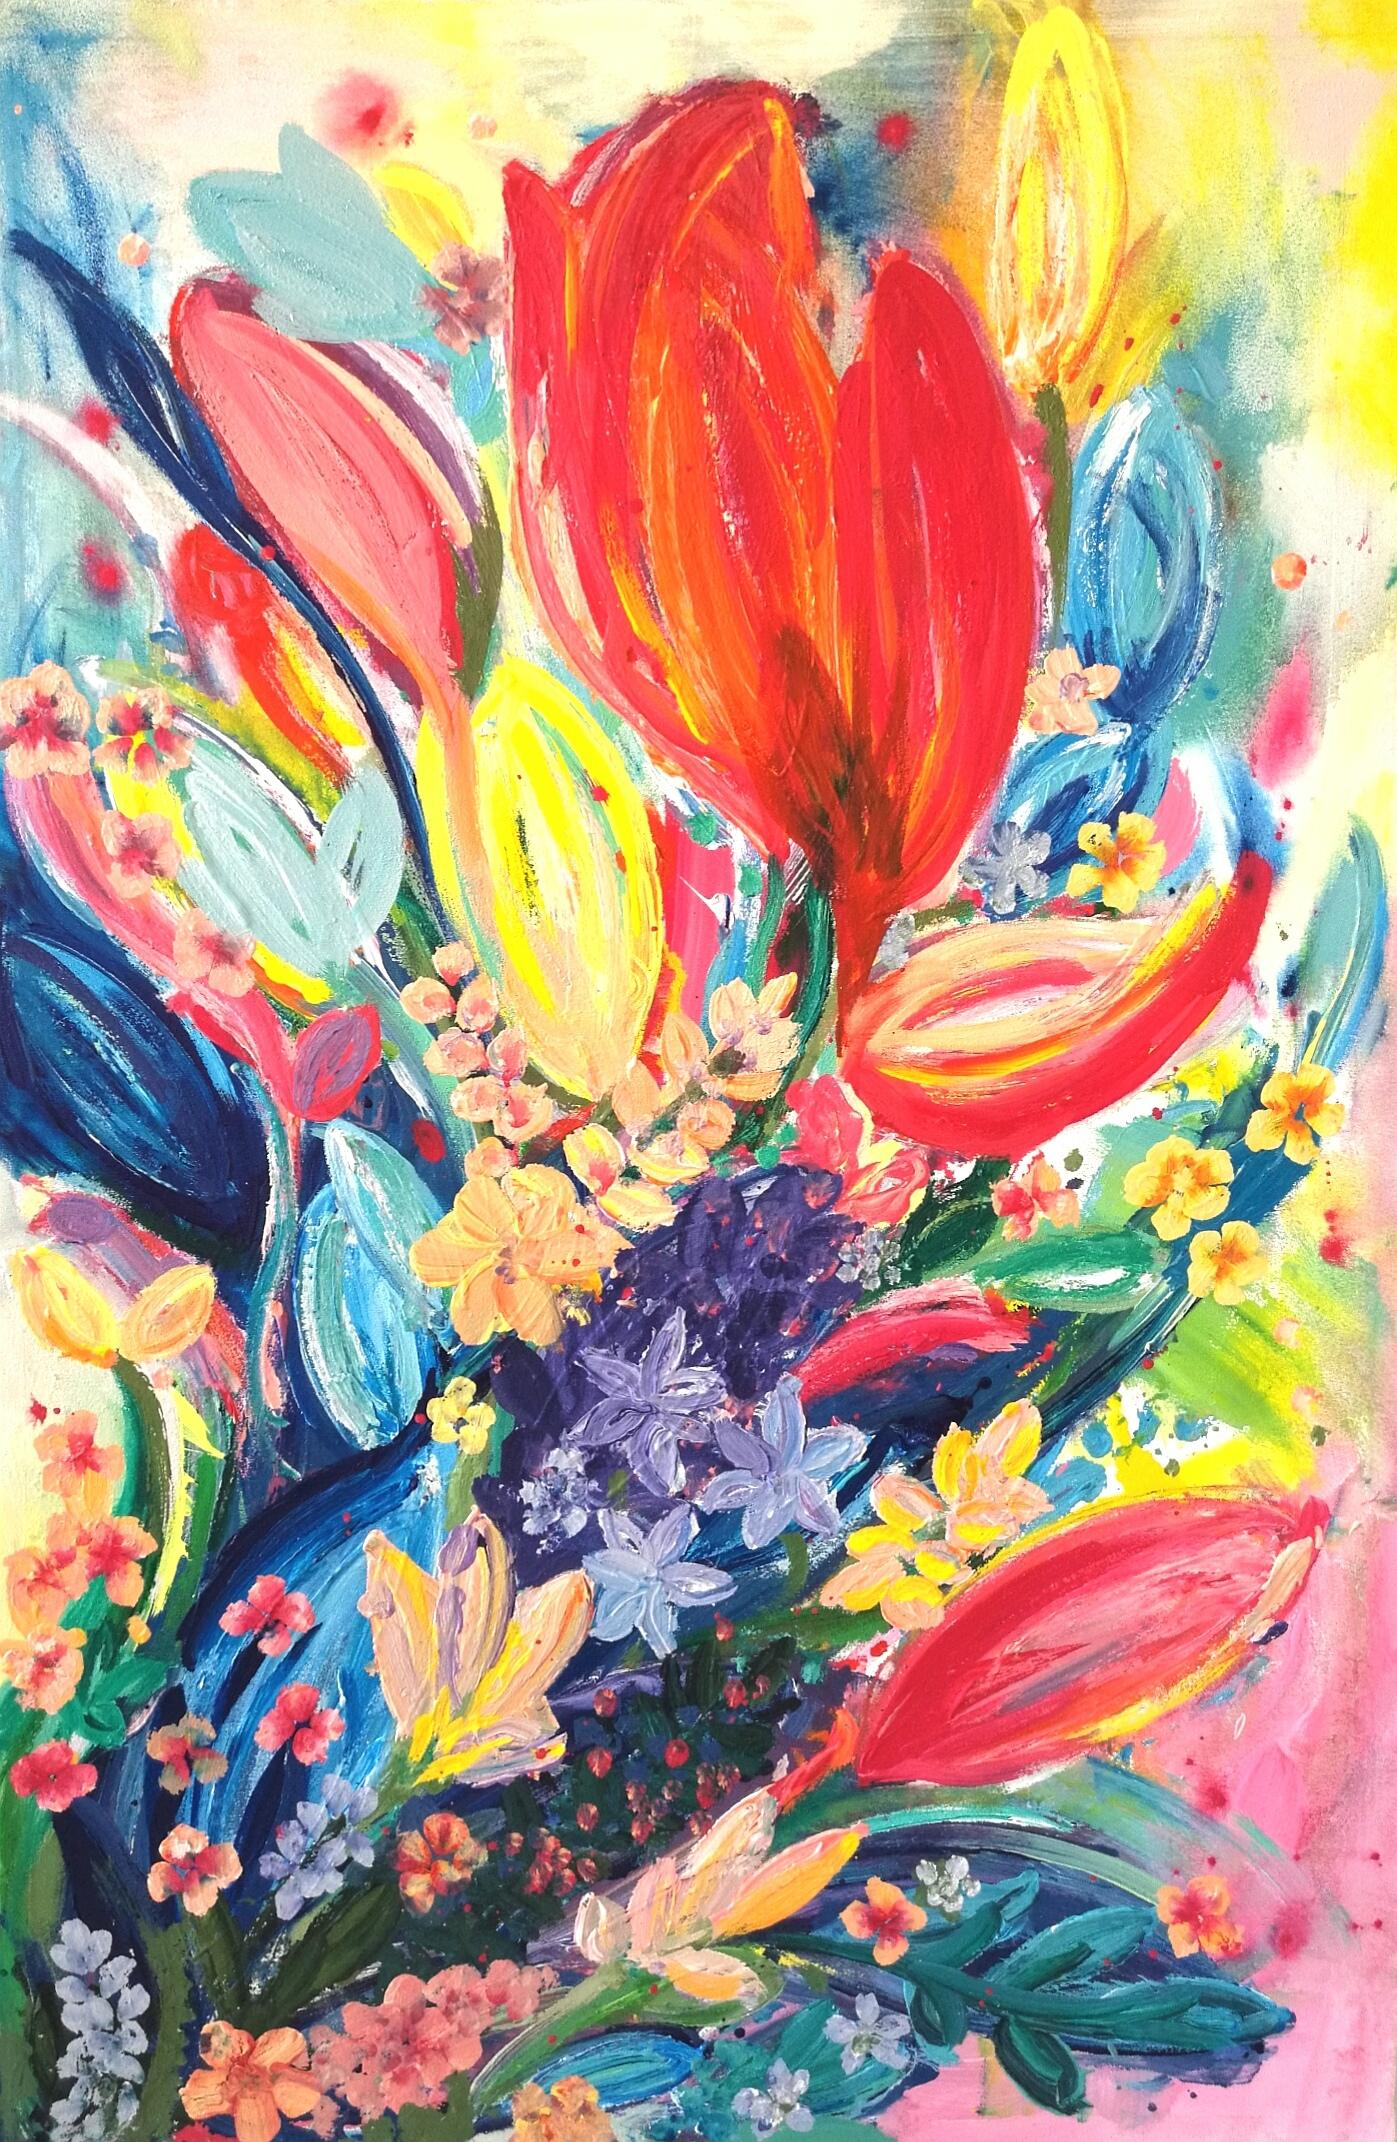 "Flower power magic" Fiona Mares Painting #wandgestaltung #wanddeko #wandbild ©Fiona Mares